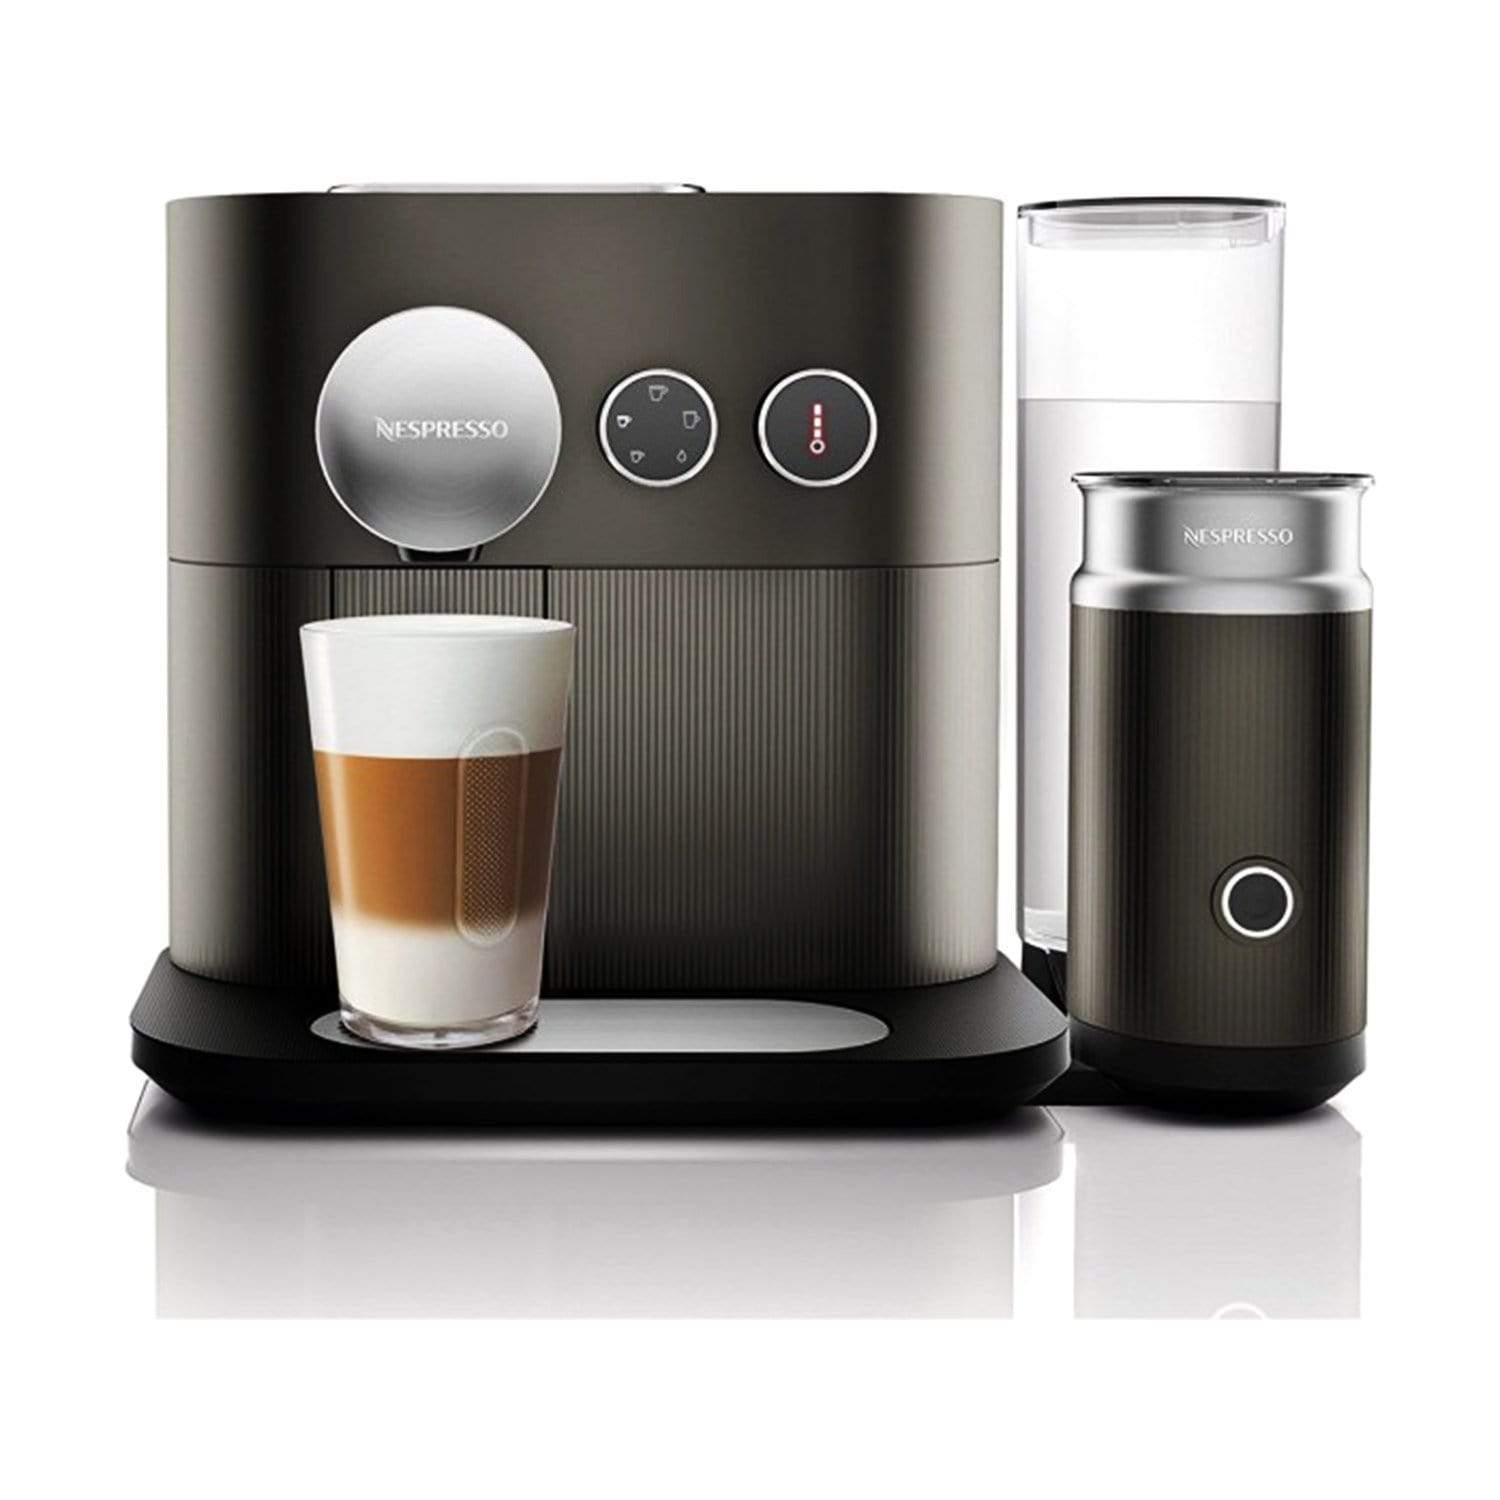 Nespresso ماكينة قهوة اكسبرت بالحليب الأسود - C85-ME-BK-NE - جاشنمال هوم